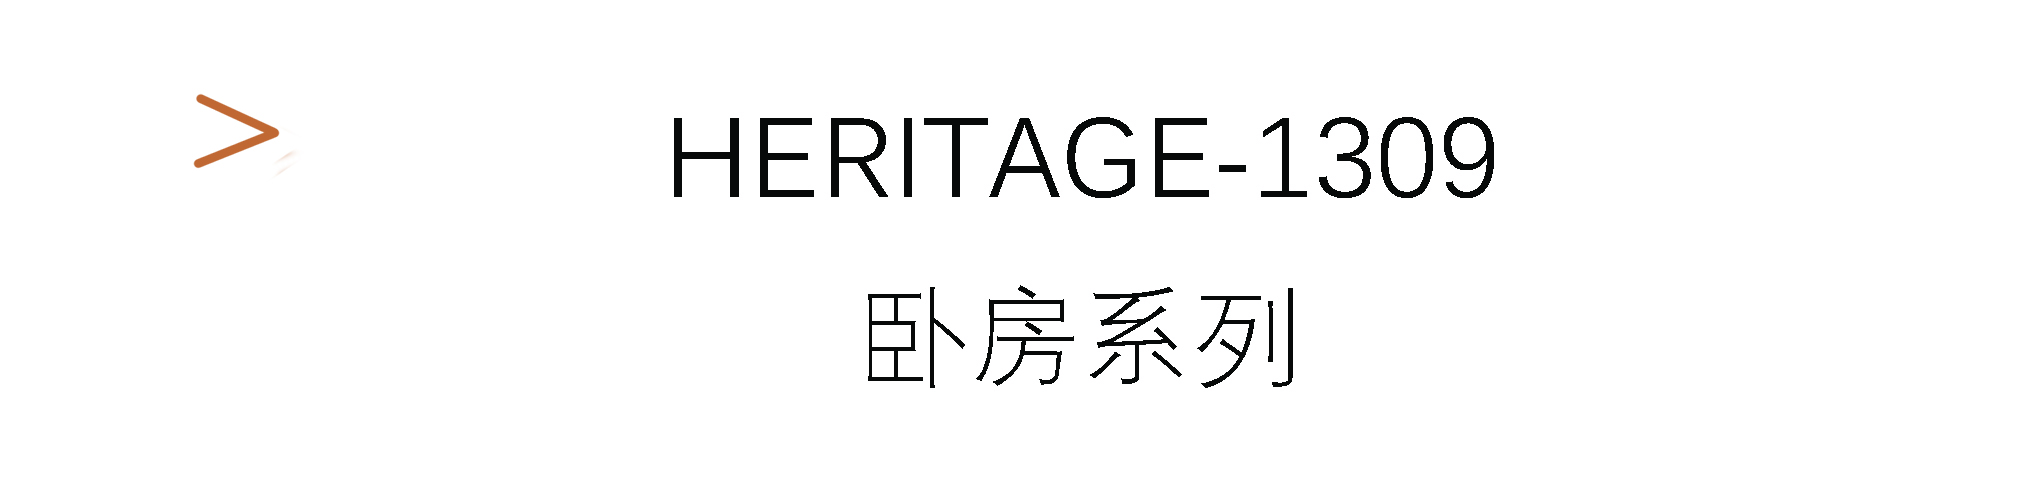 Heritage-1309